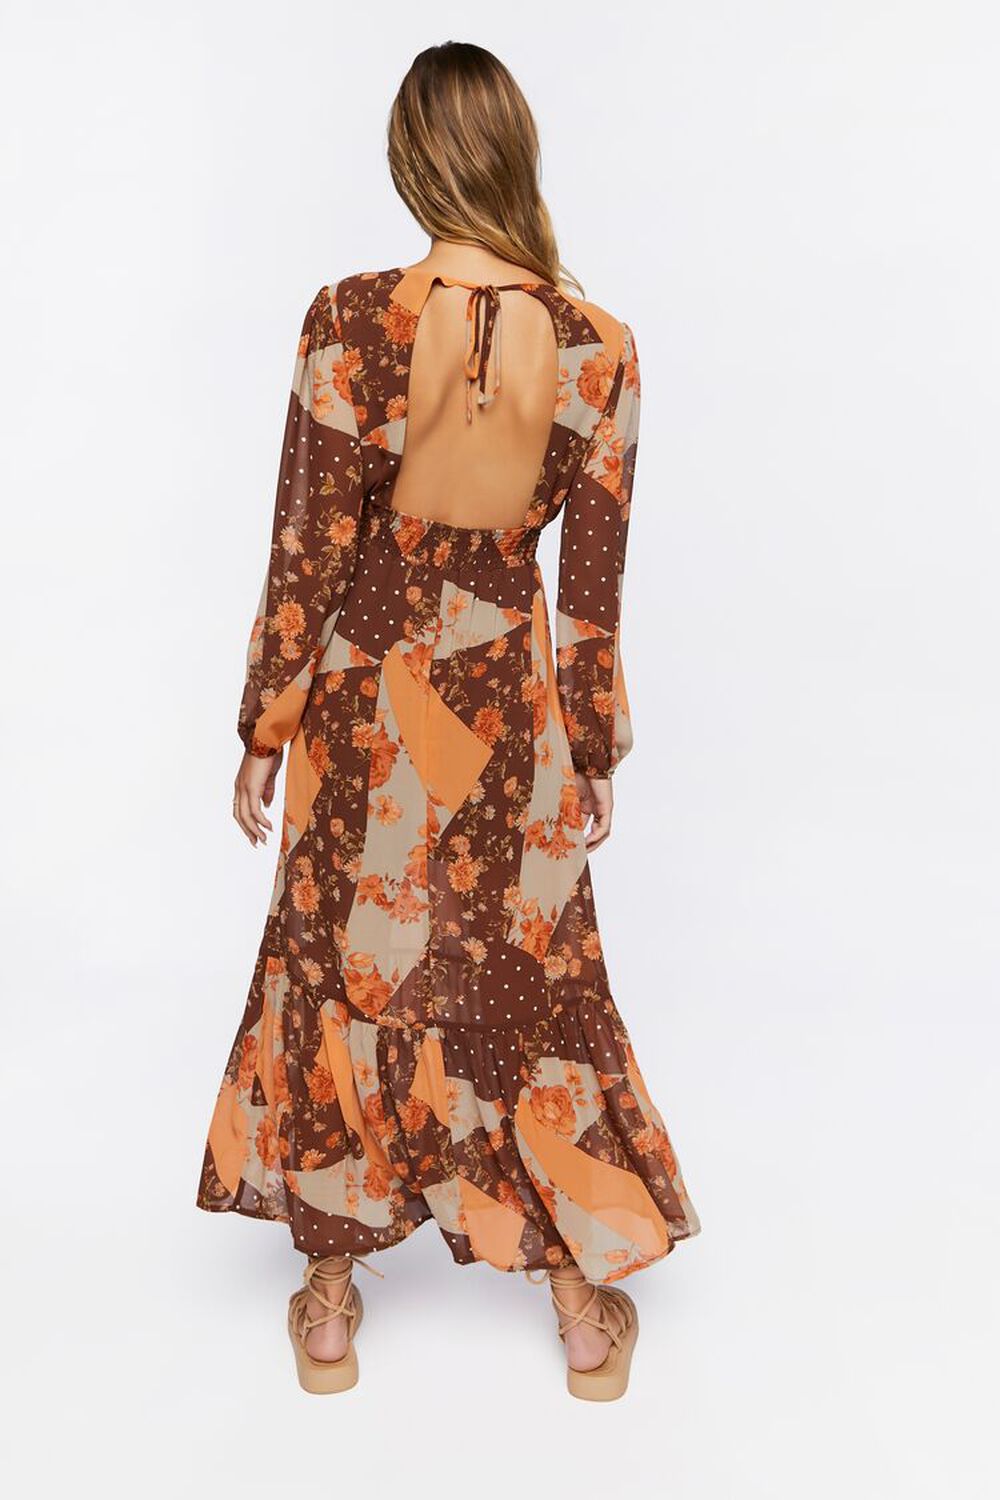 BROWN/MULTI Patchwork Print Maxi Dress, image 3